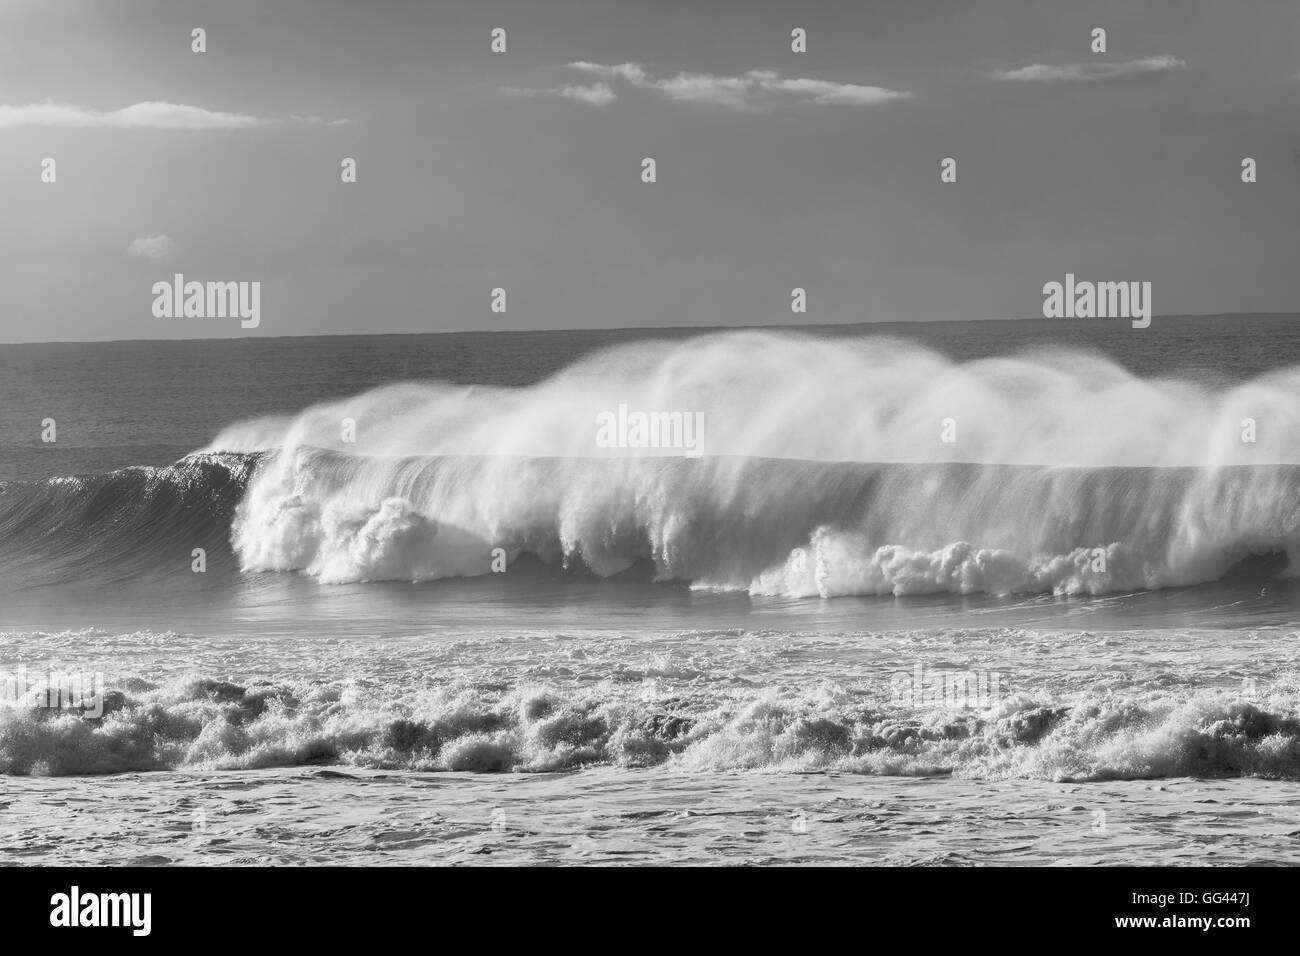 Ozeanwellen, die Kraft des Wassers entlang der felsigen Küste Sturm Strandwetter in schwarz-weiß Kontraste... Stockfoto